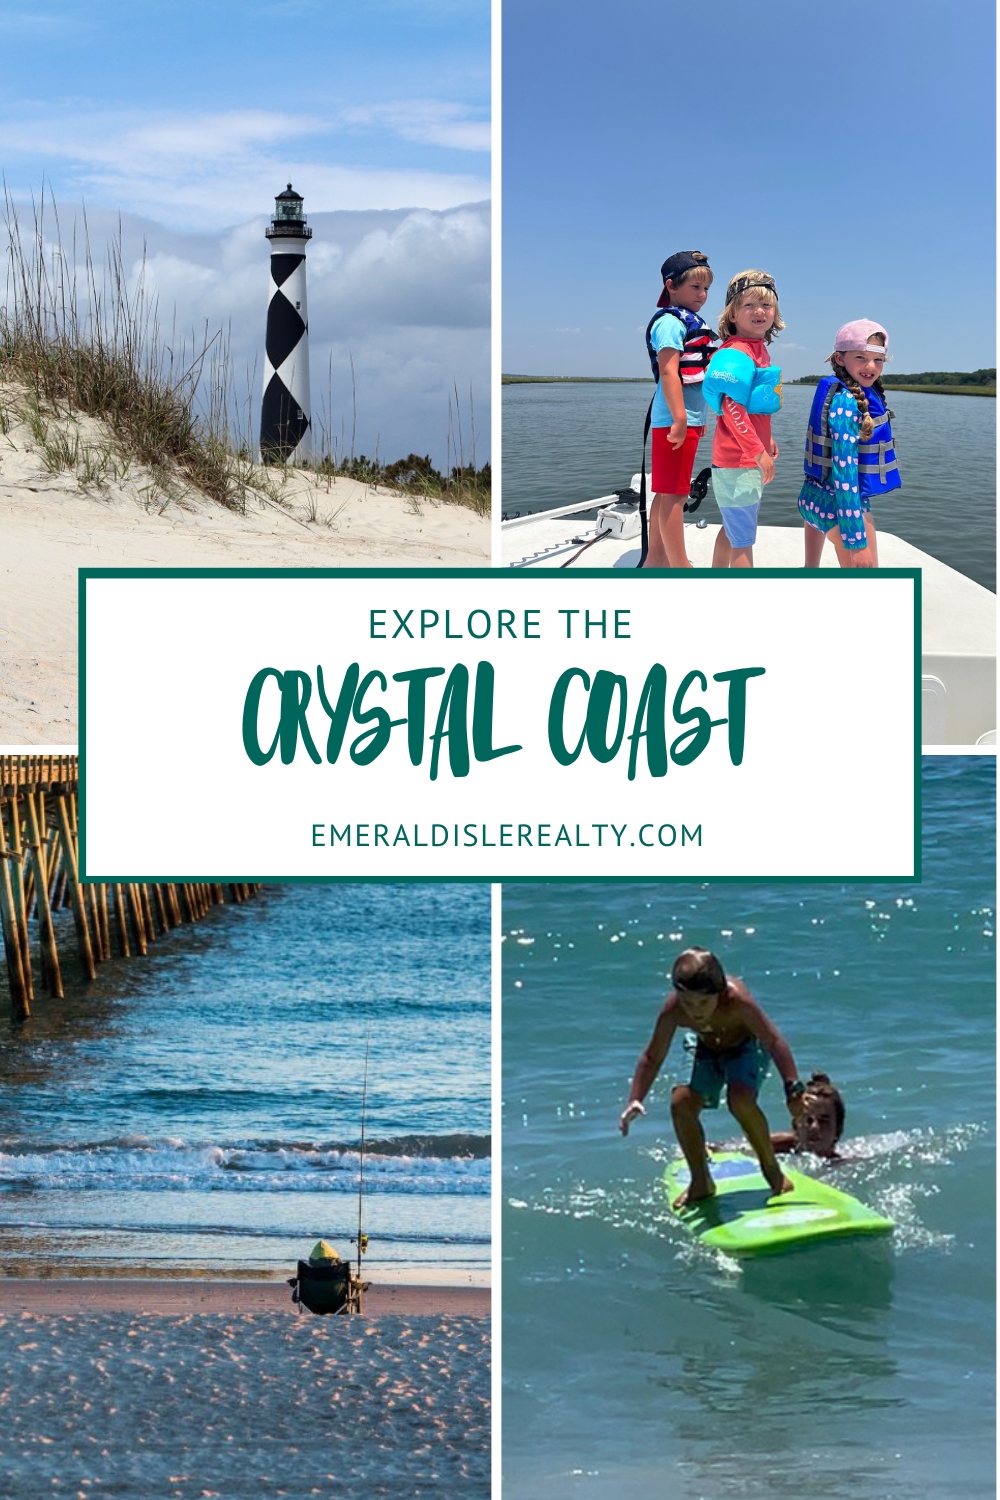 Explore the Crystal Coast